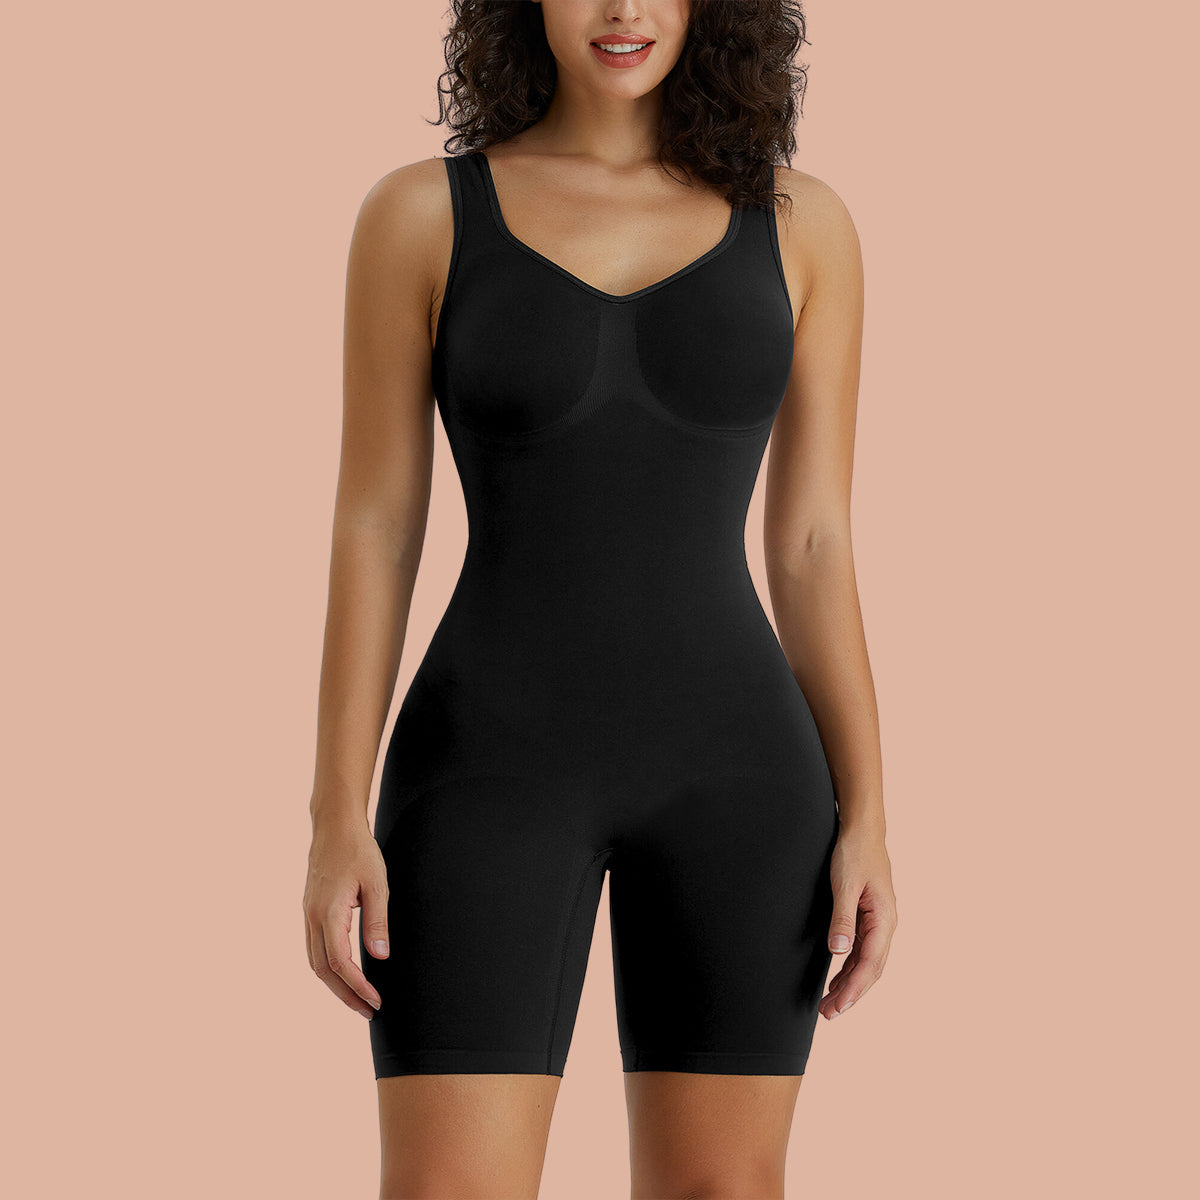 PEASKJP High Waisted Bodysuit Firm Control Body Shaper Comfortable for  Women Under Dress Thigh Slimmer Bodysuit, C XL 